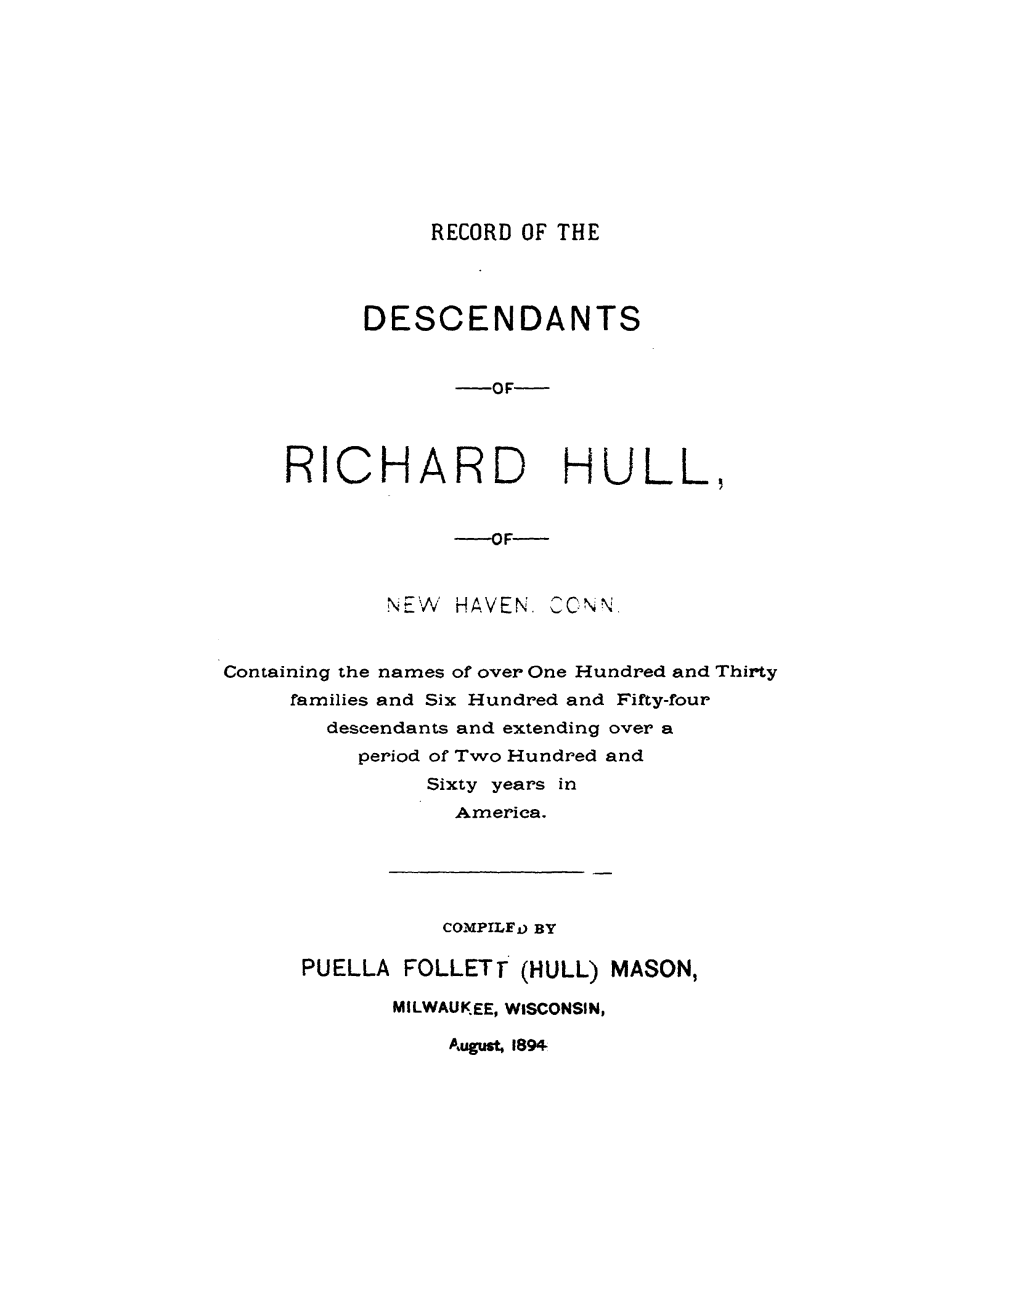 Richard Hull